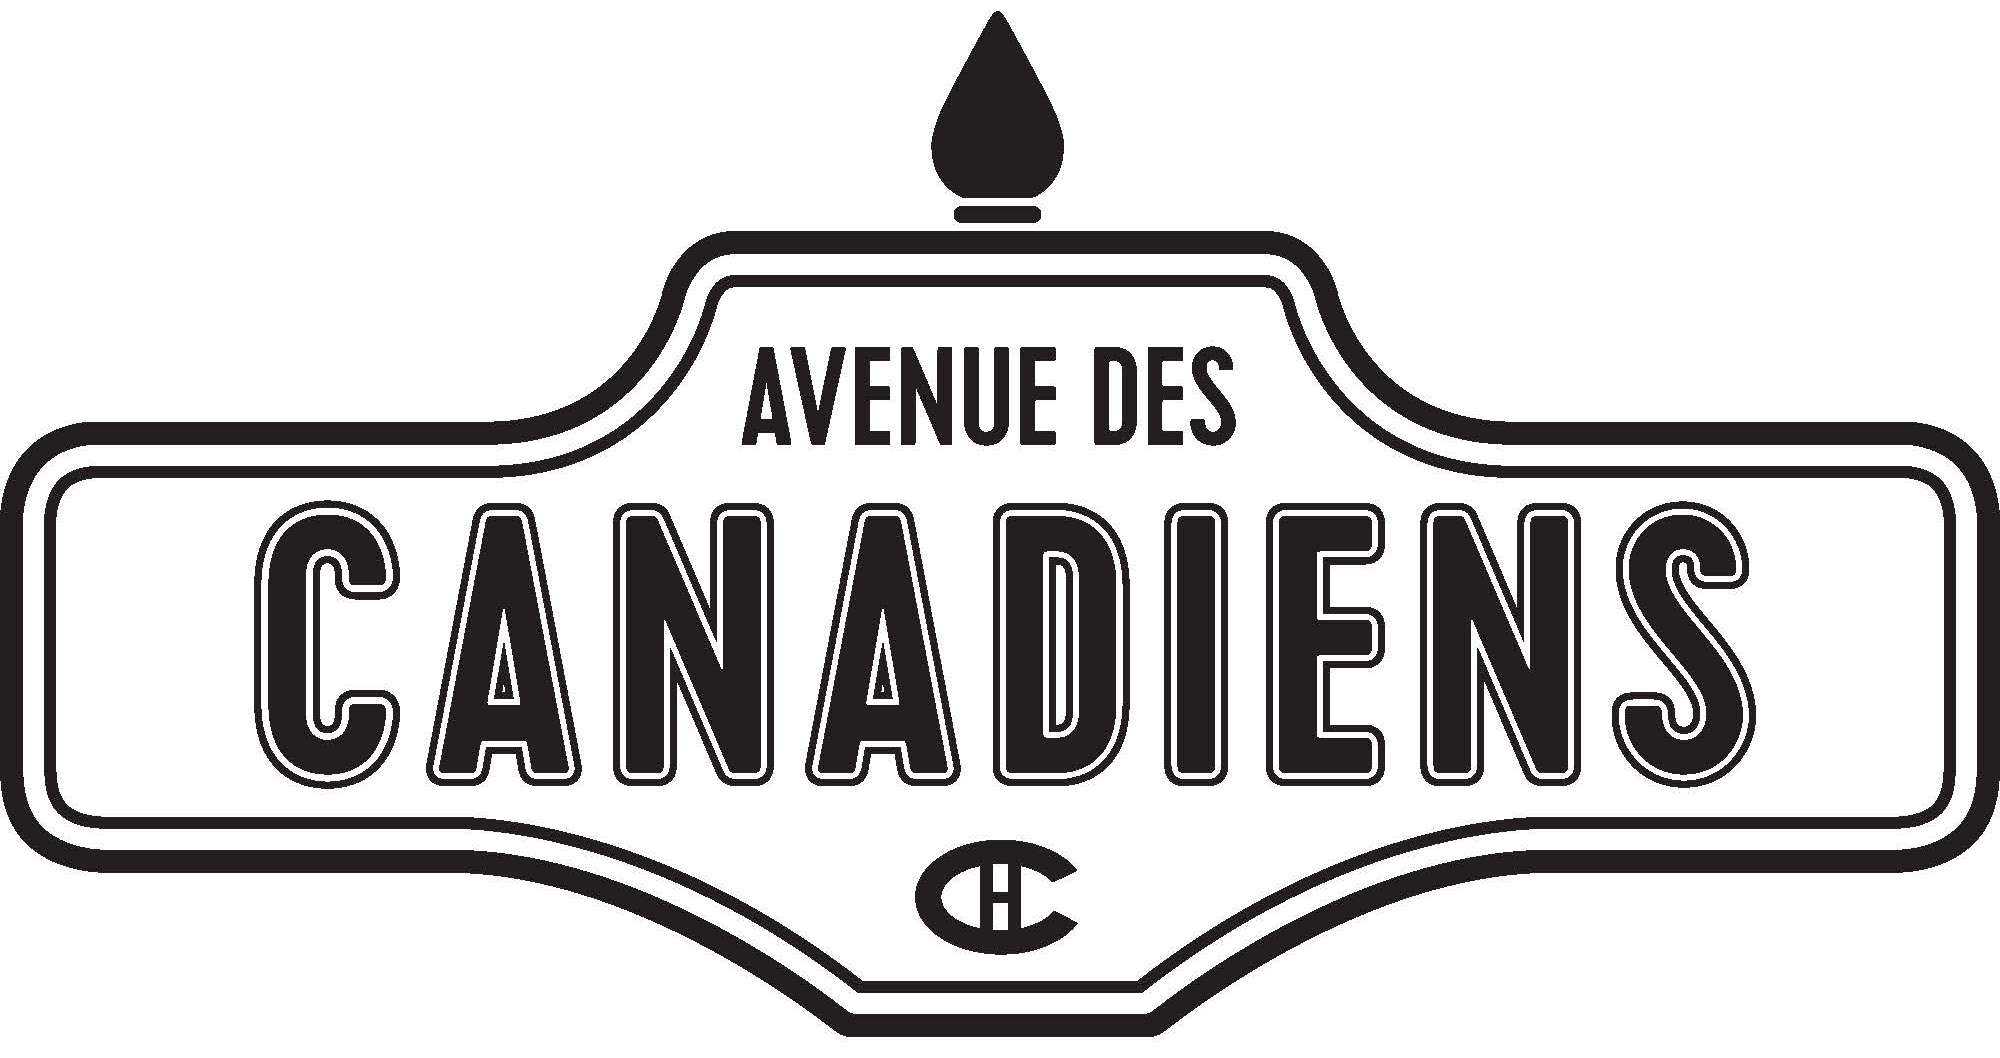 Avenue des Canadiens